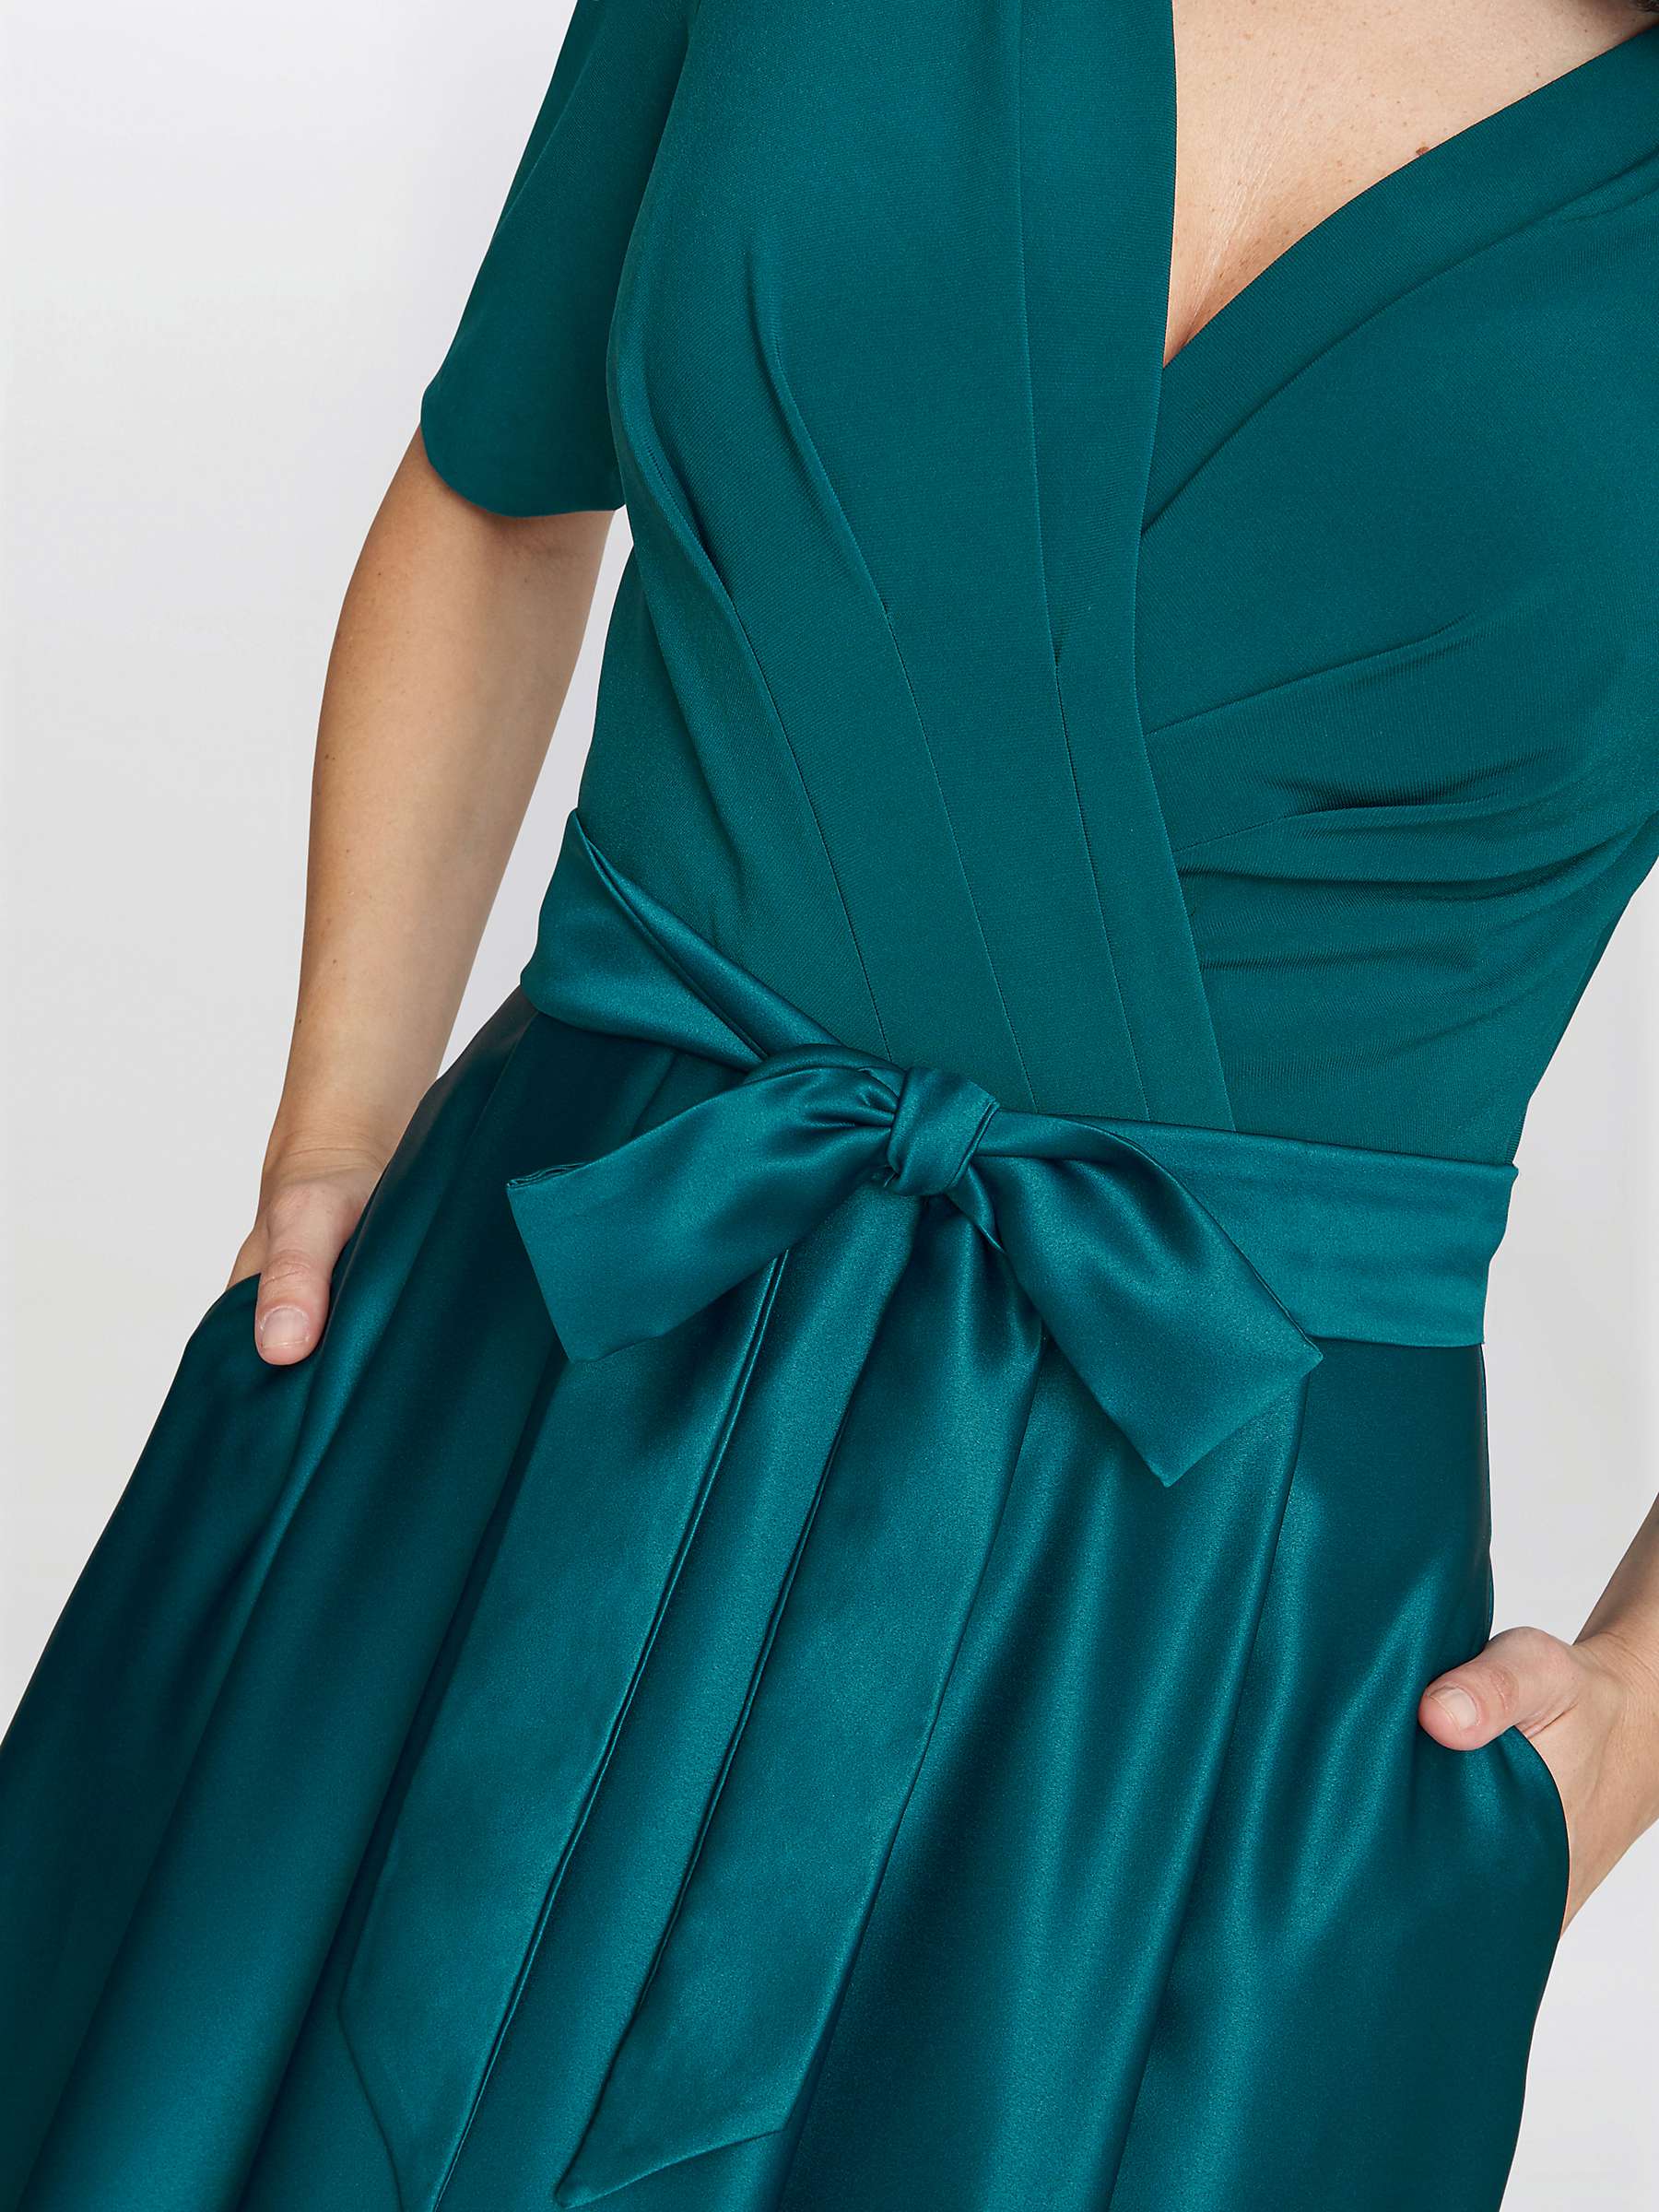 Buy Gina Bacconi Luna Satin Skirt Maxi Dress, Emerald Online at johnlewis.com